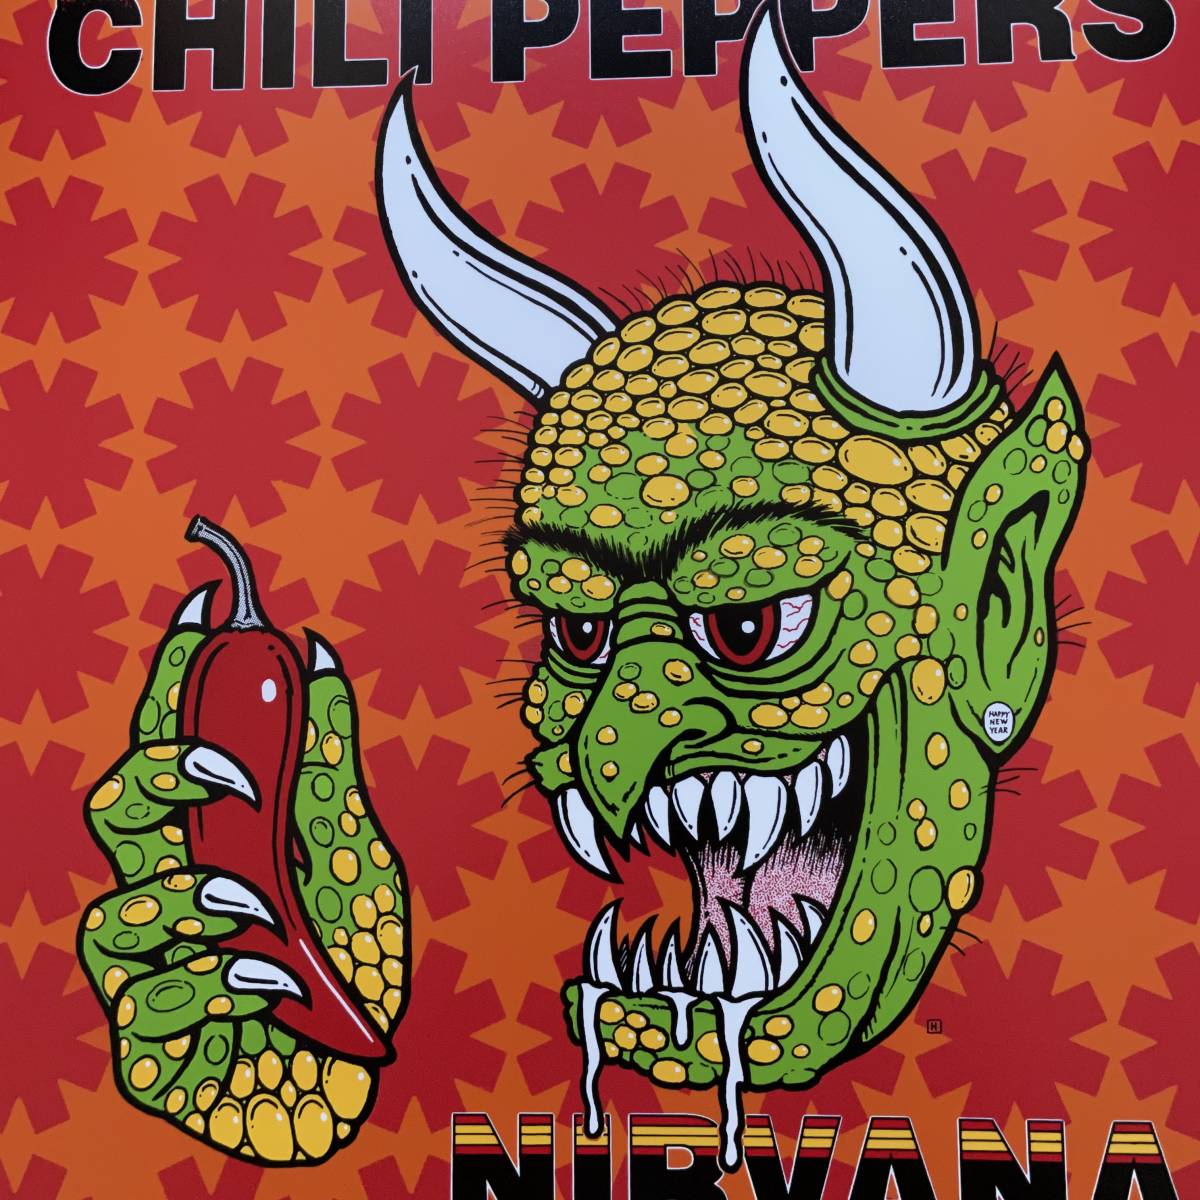  постер * красный * hot * Chile * перец z,niru горелка, жемчуг * джем 1991*Red Hot Chili Peppers/re Chile /Nirvana/Pearl Jam